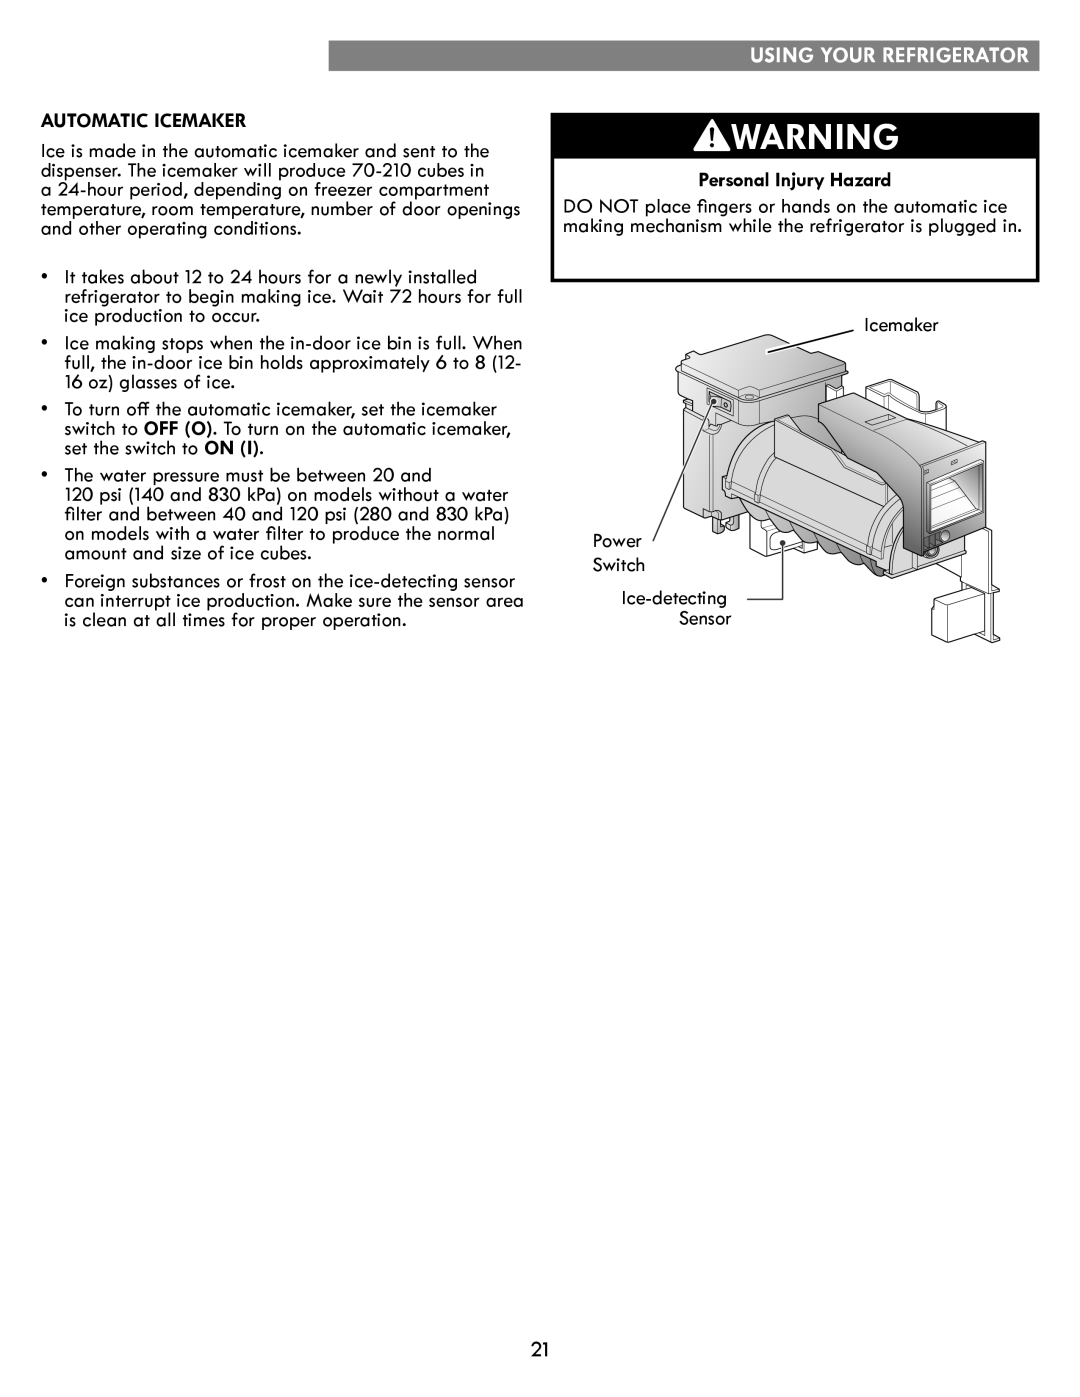 Kenmore kenmore manual Using Your Refrigerator, Automatic Icemaker, Personal Injury Hazard 